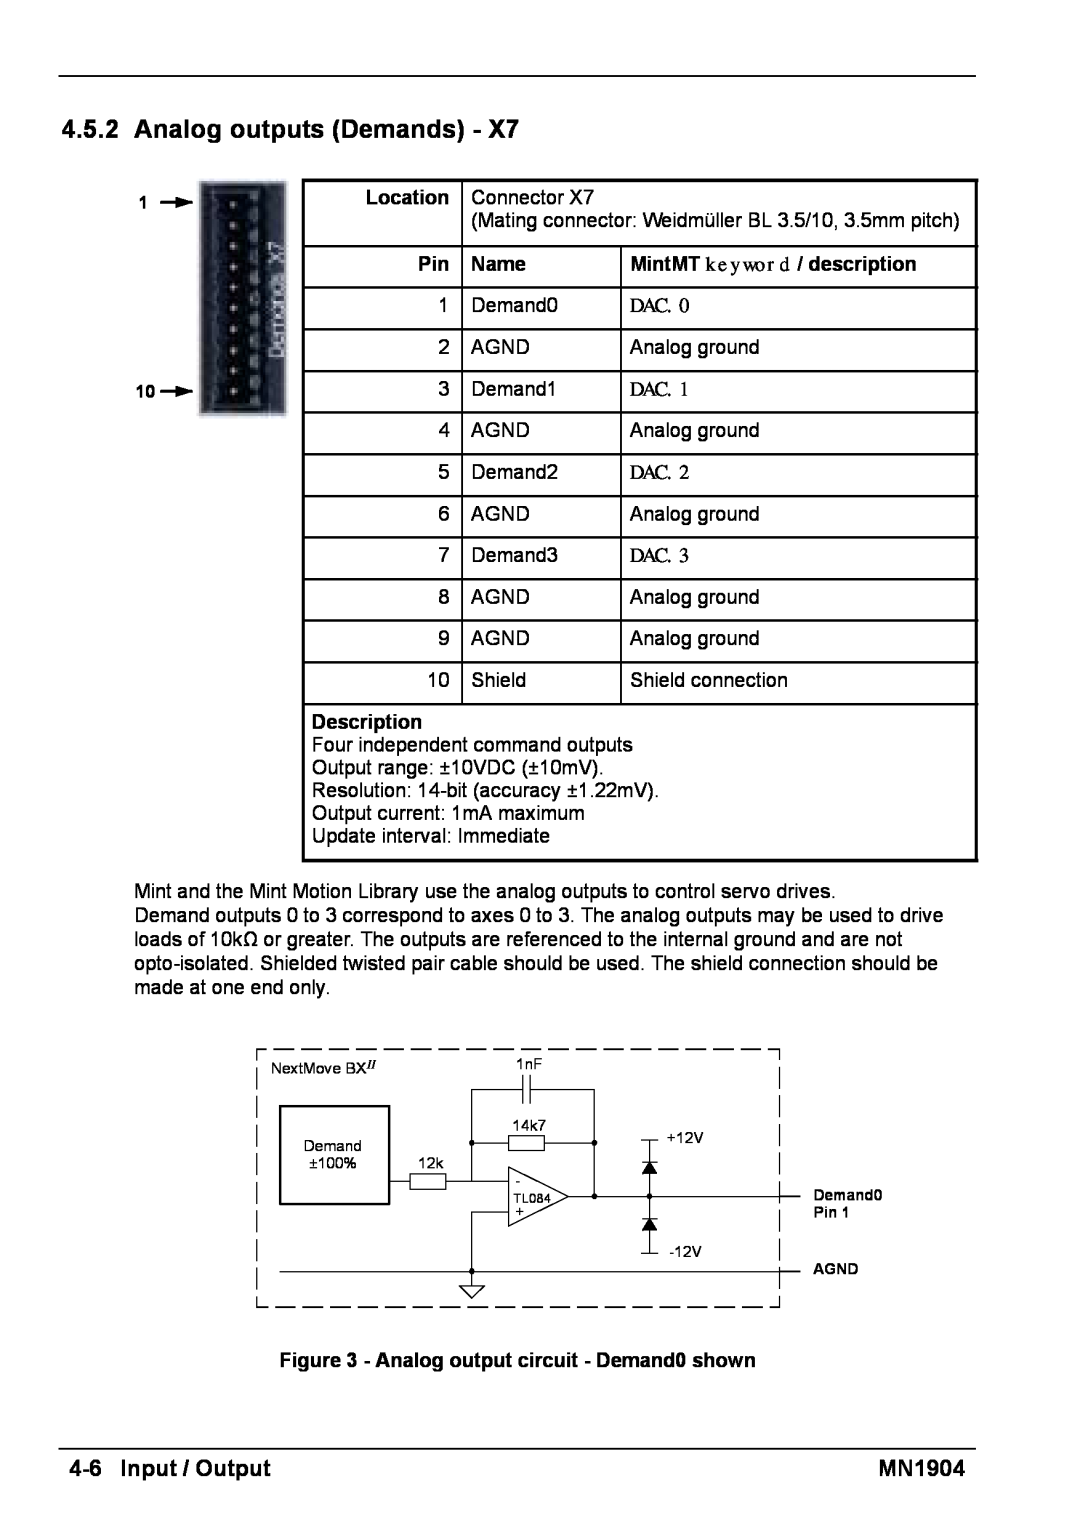 Baldor BXII installation manual Analog outputs Demands, 4-6Input / Output, MN1904 